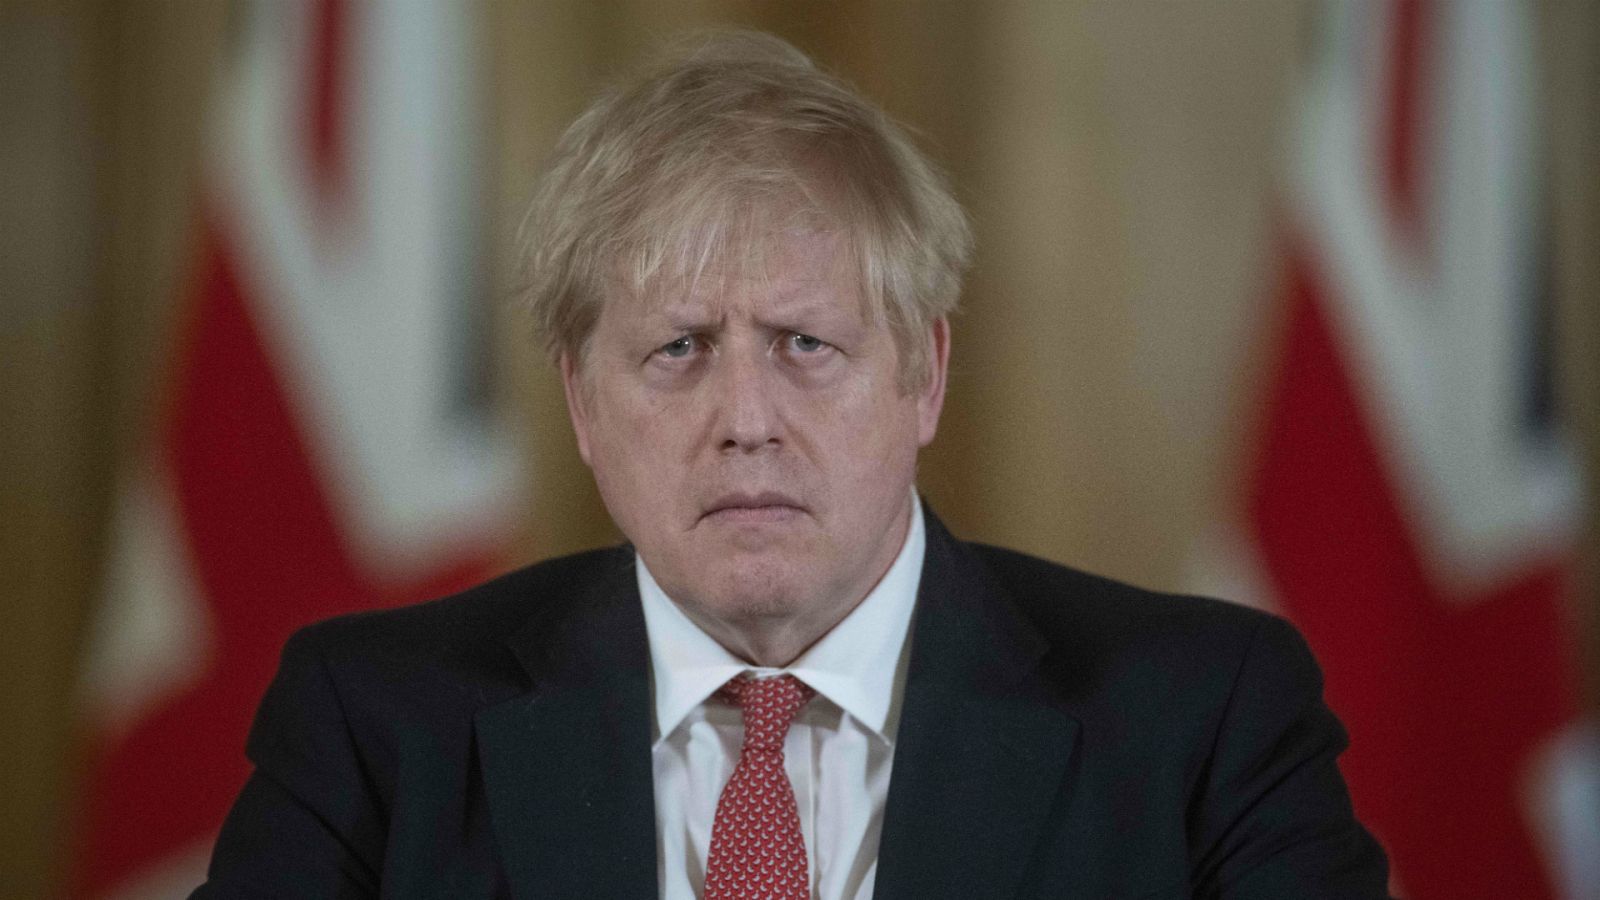 14 horas - El primer ministro británico, Boris Johnson, da positivo en coronavirus - Escuchar ahora